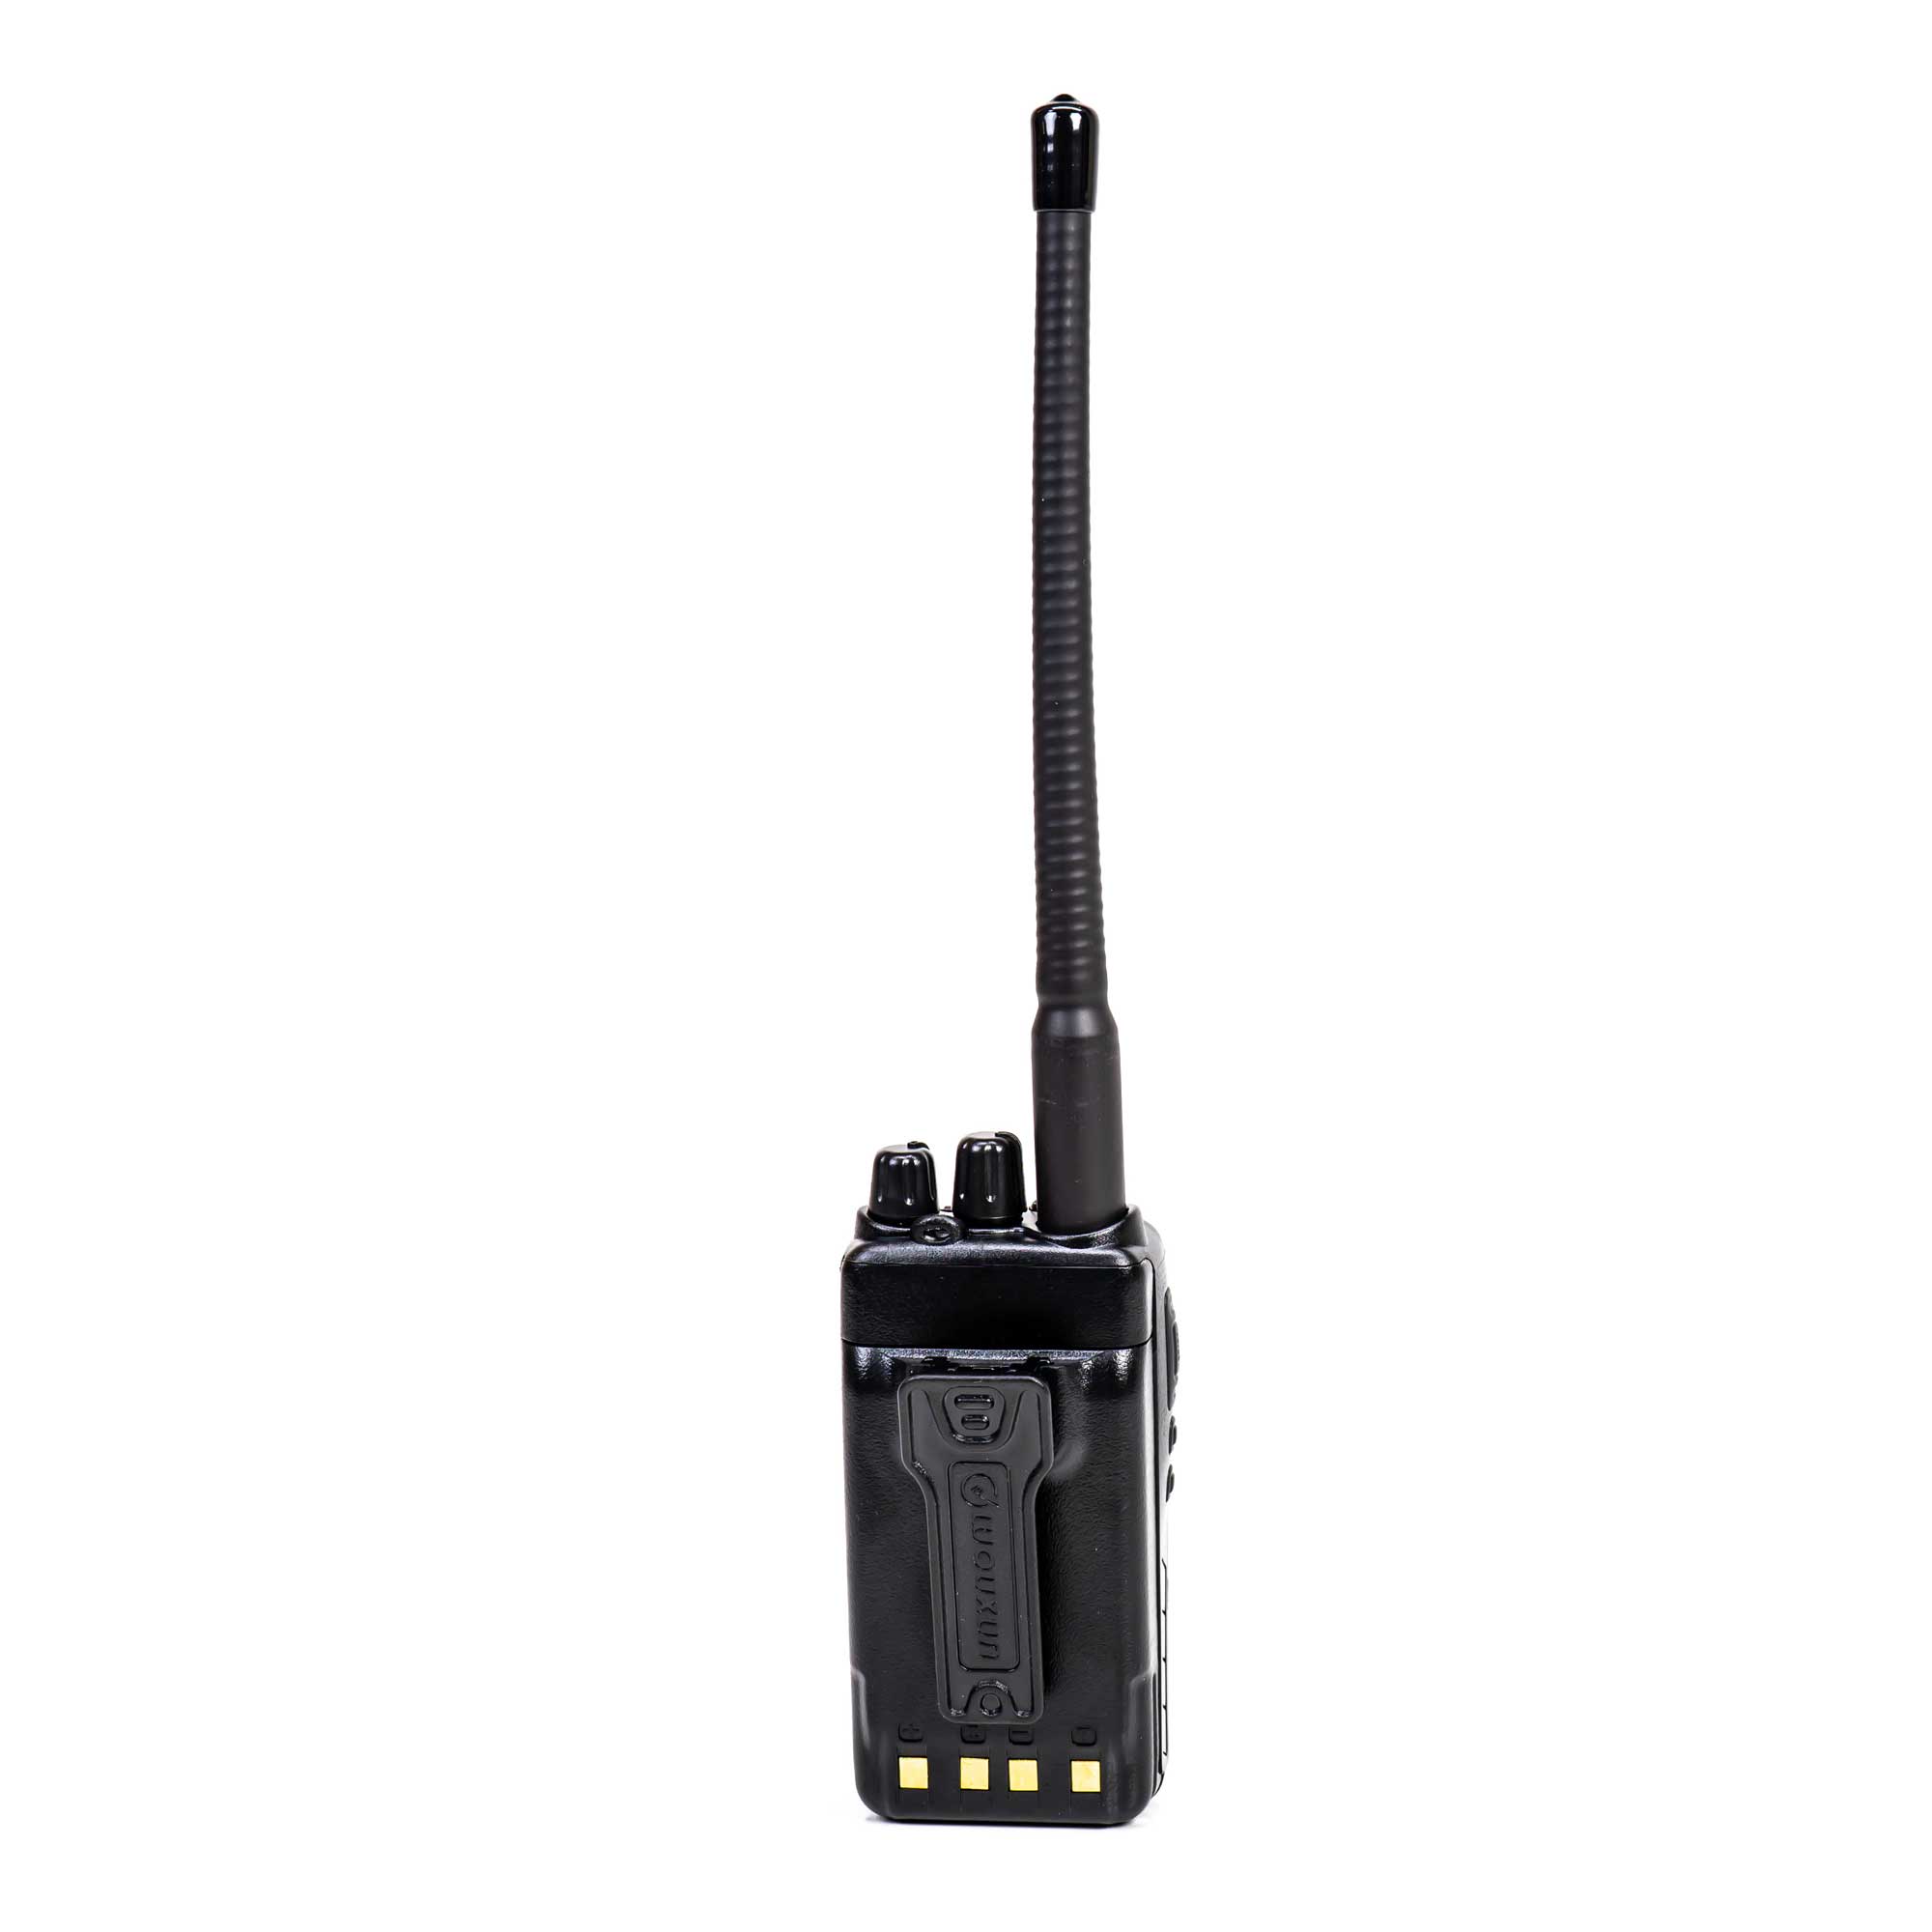 Statie radio portabila VHF PNI KG-889, 66-88 MHz image4